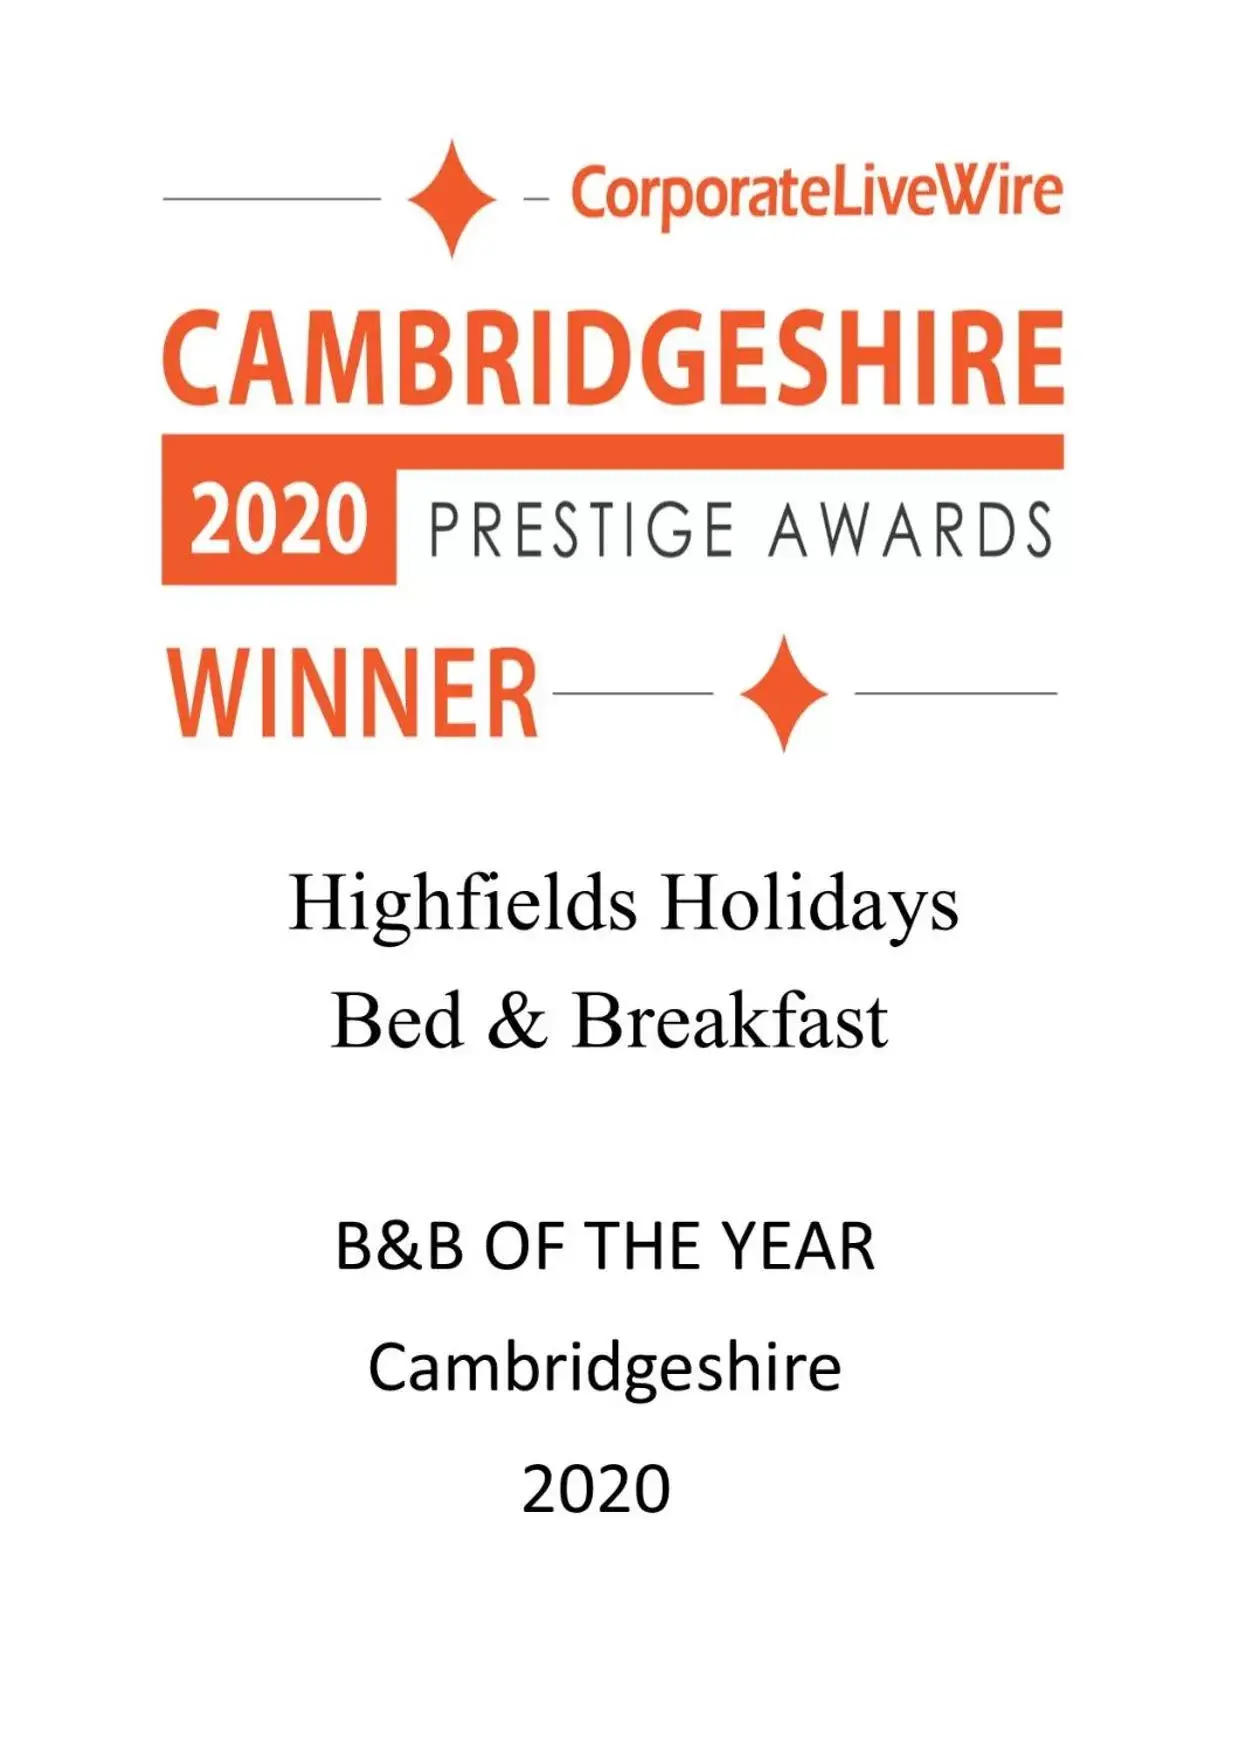 Certificate/Award in Highfields Holidays bed & breakfast